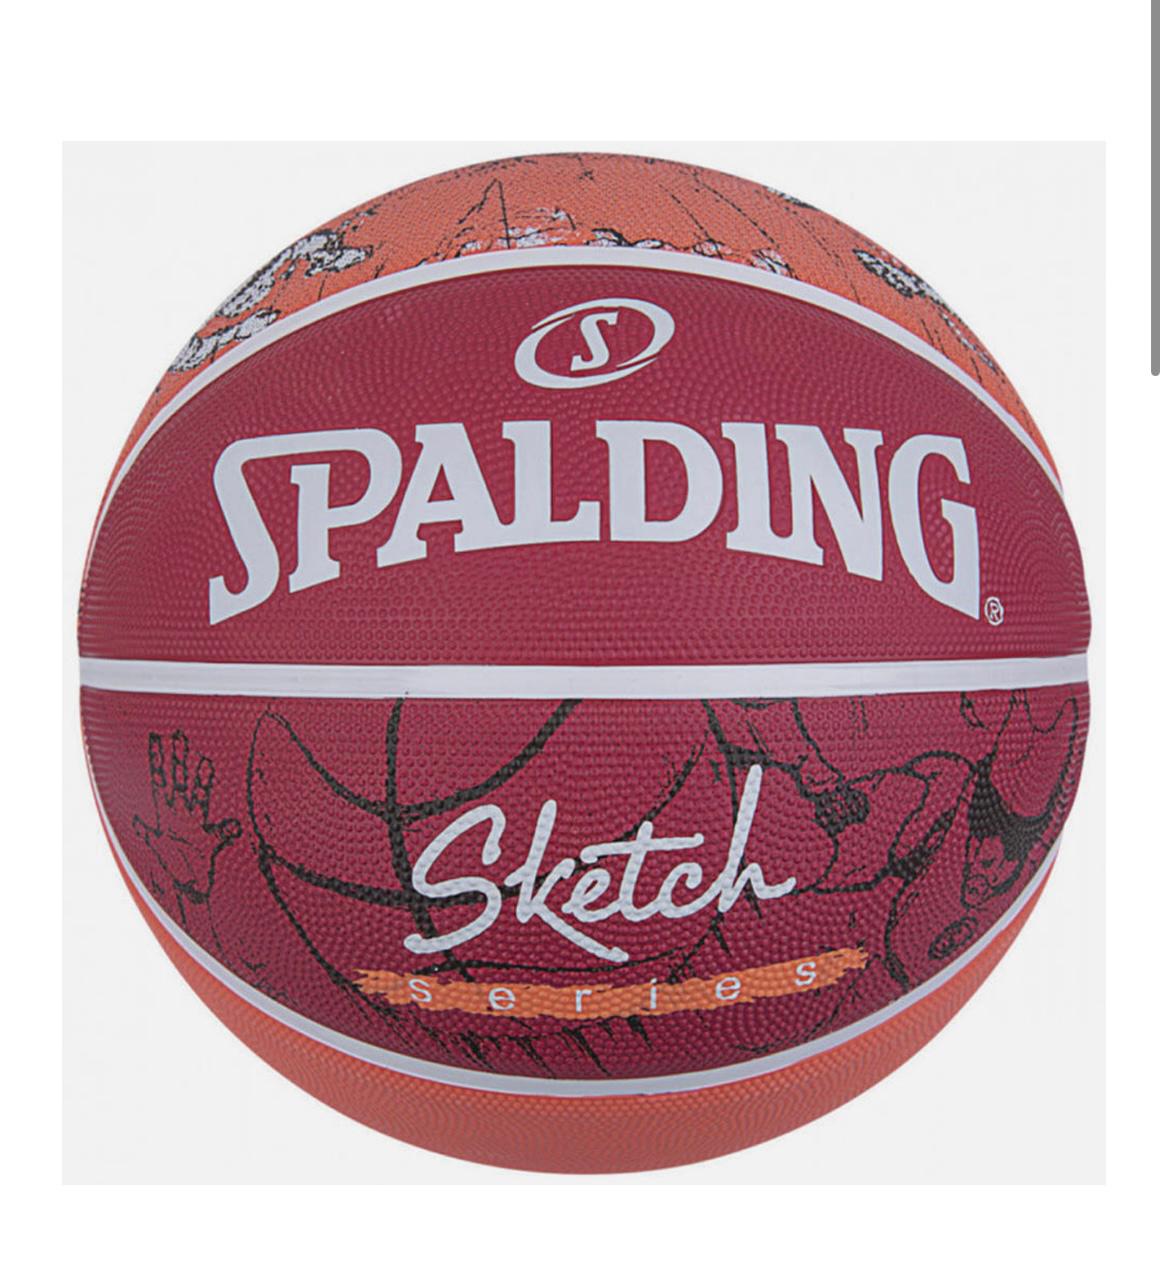 Spalding Sketch Dribble Basketball